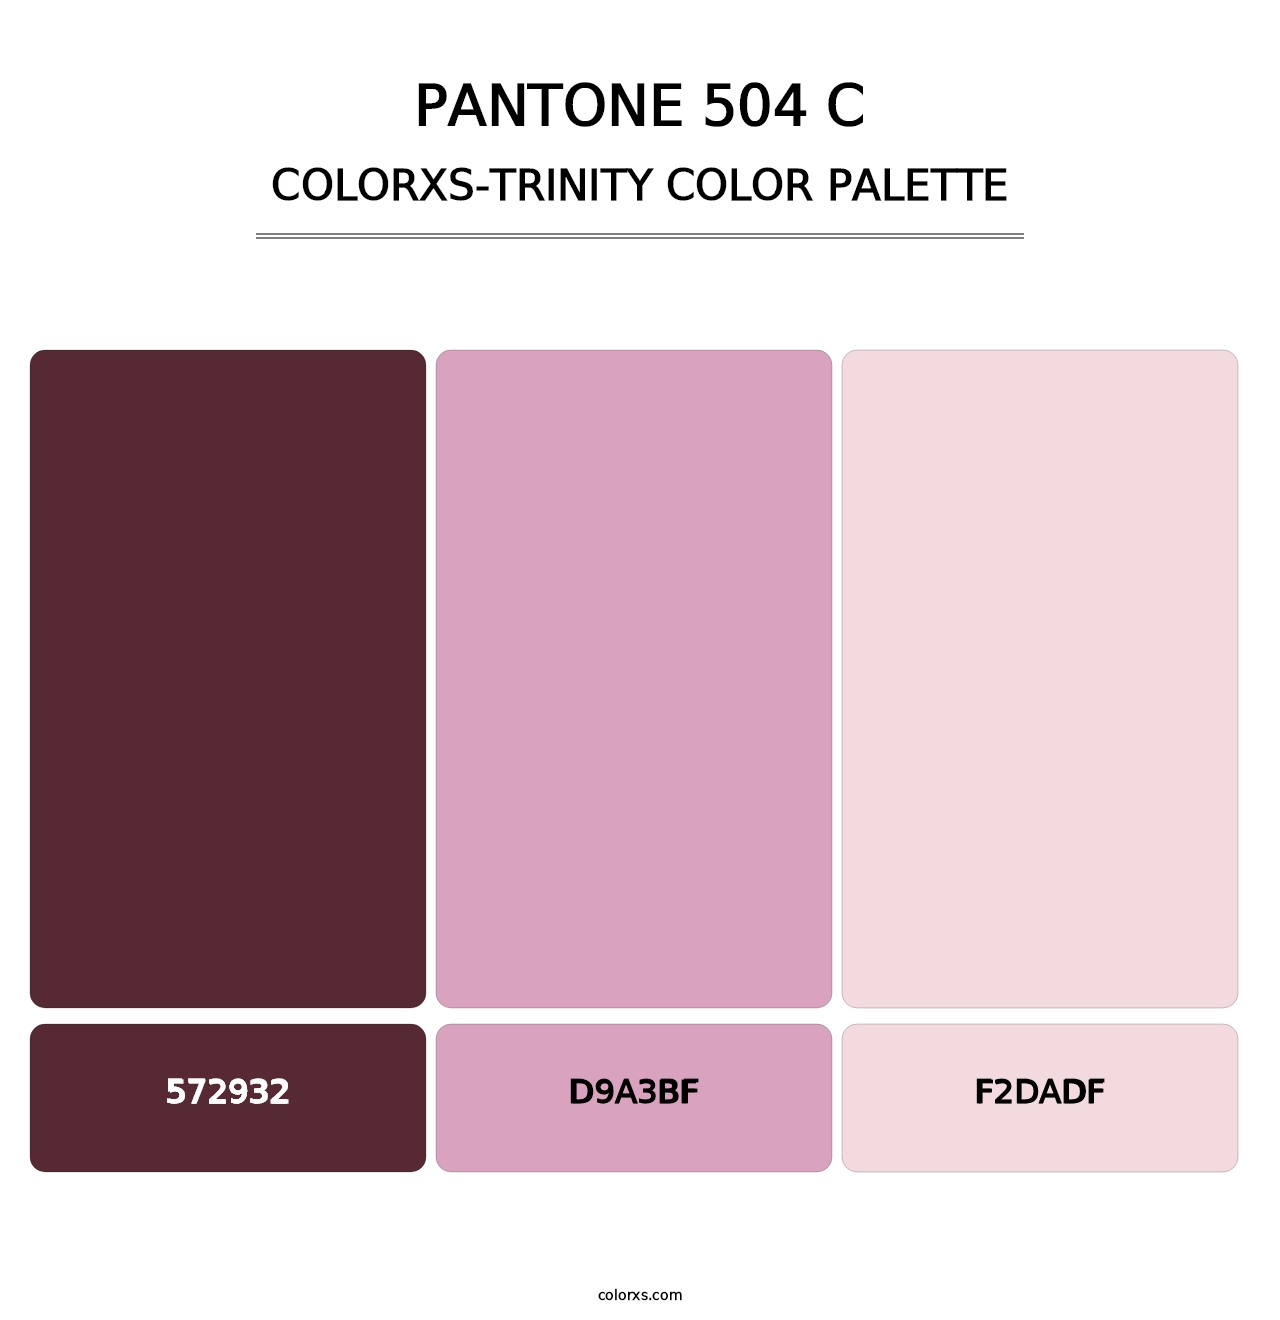 PANTONE 504 C - Colorxs Trinity Palette